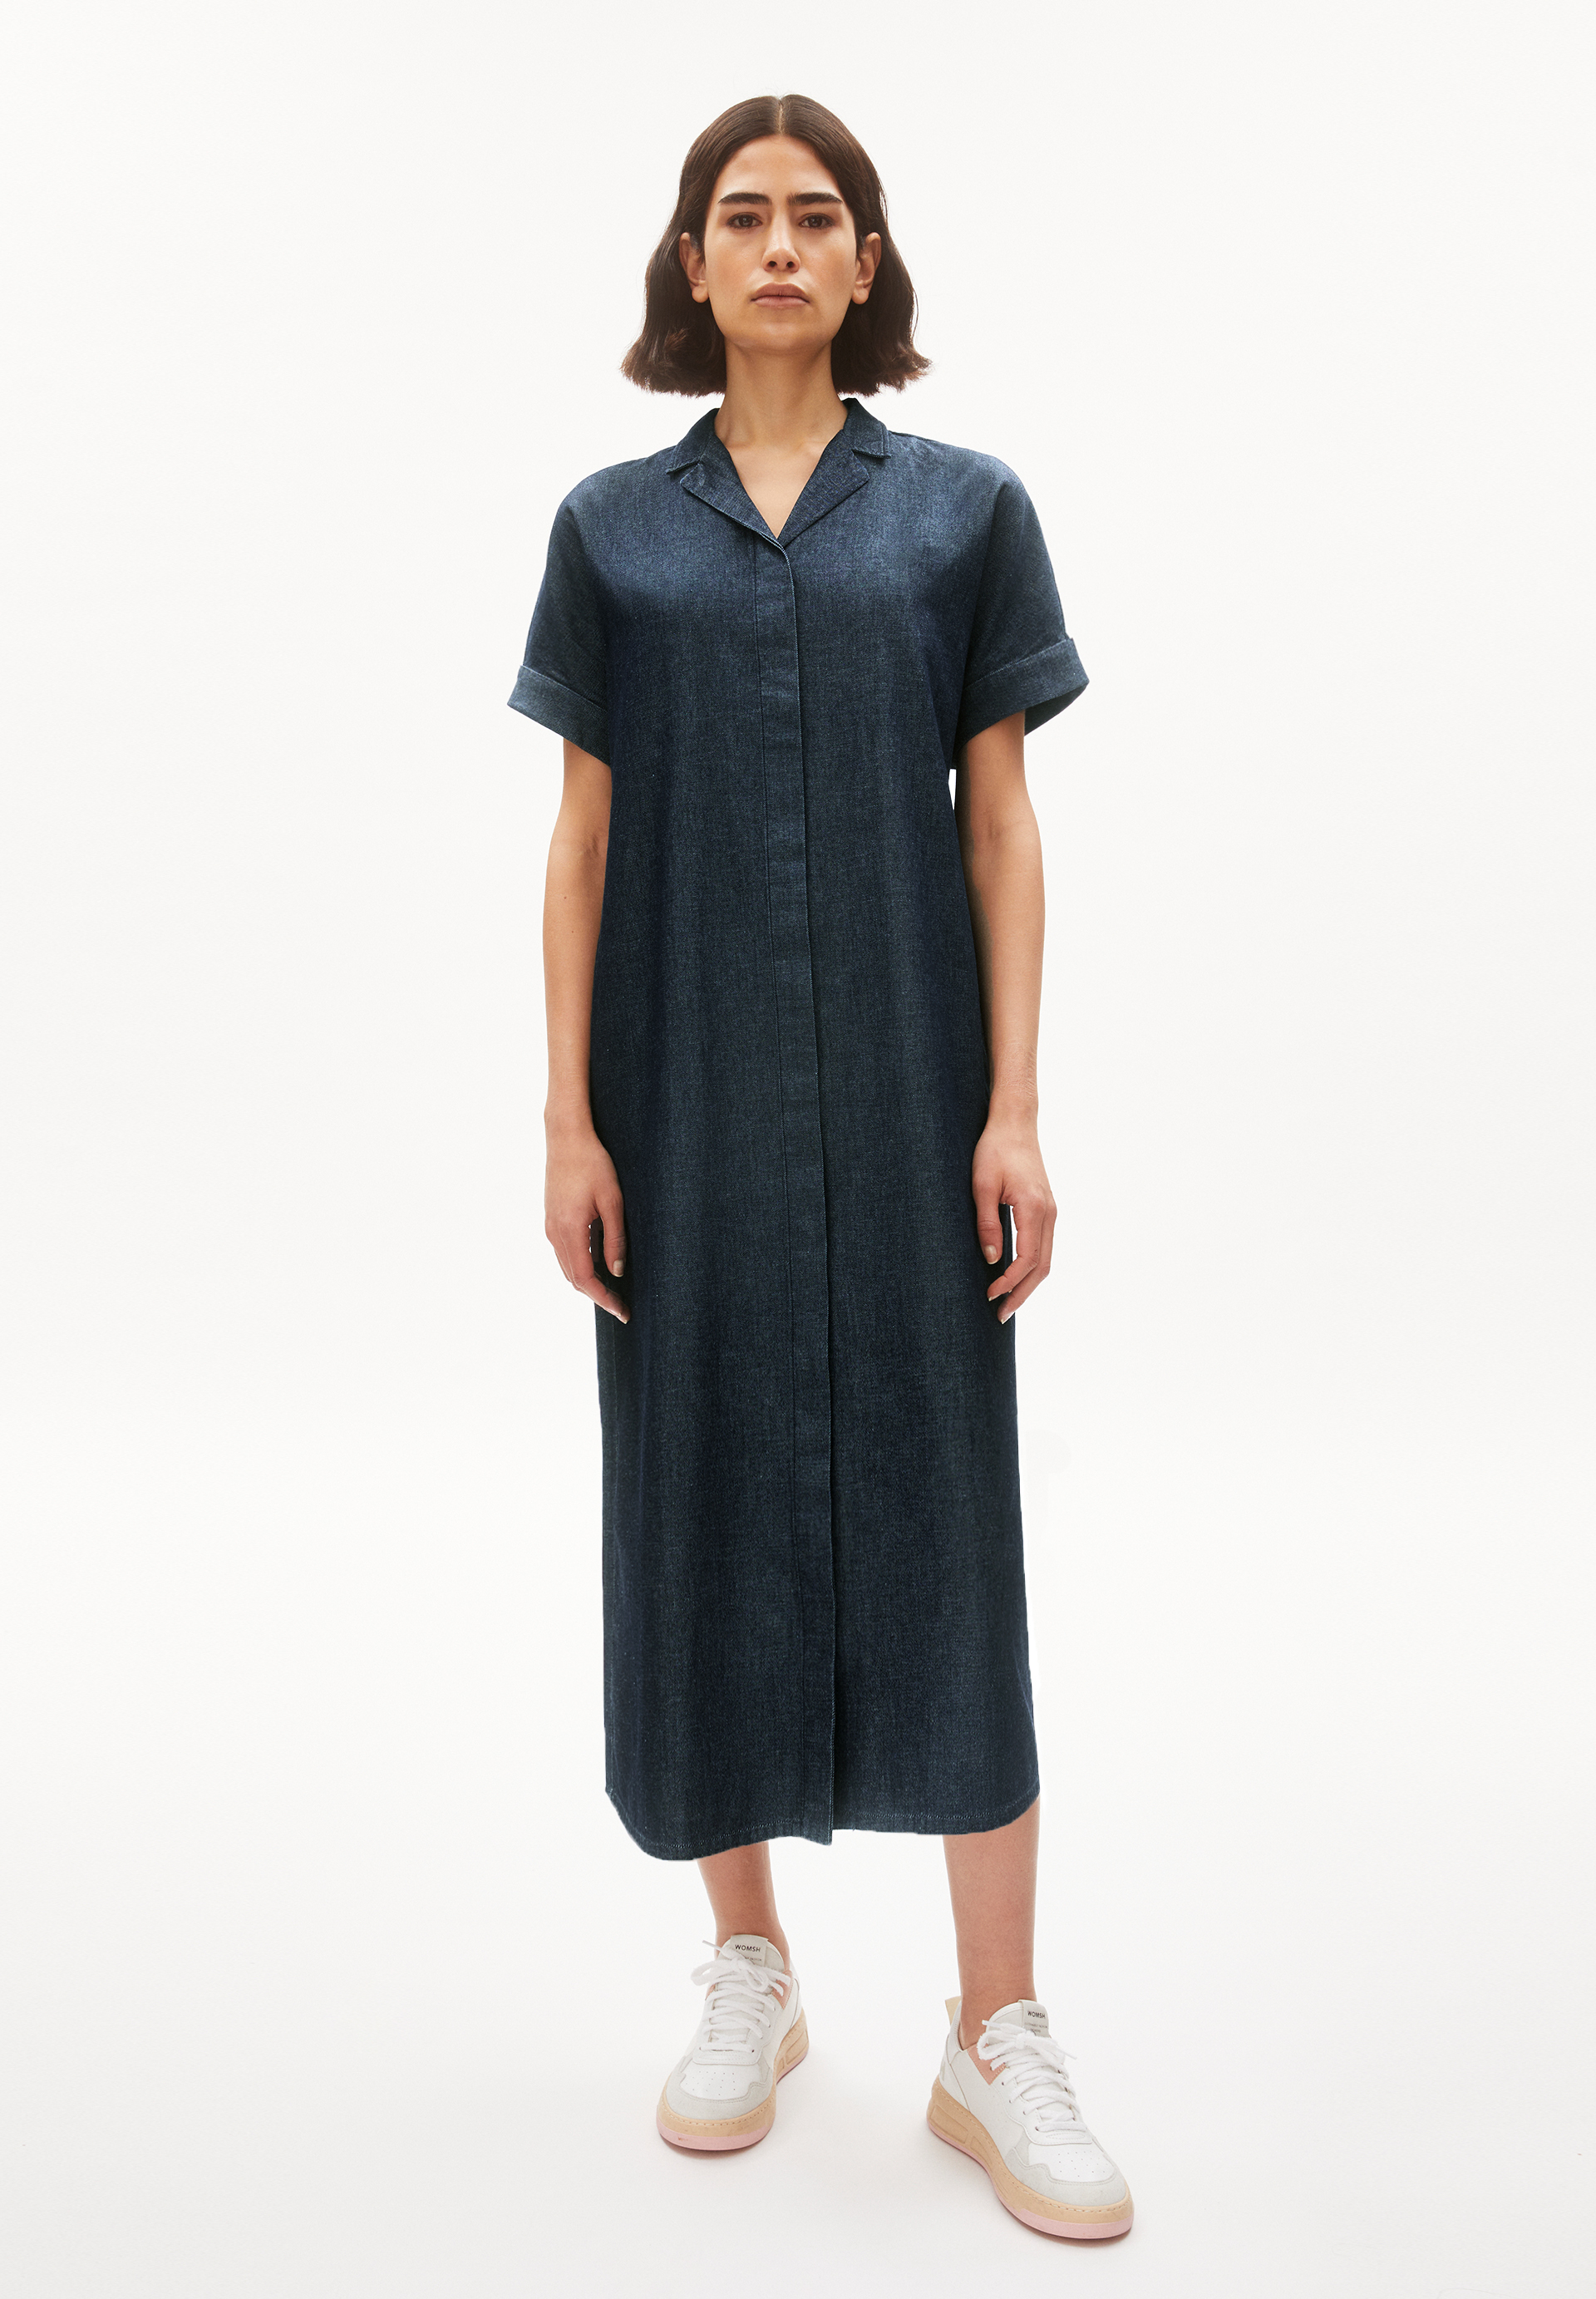 FAYNAA Denim Dress Oversized Fit made of Organic Cotton